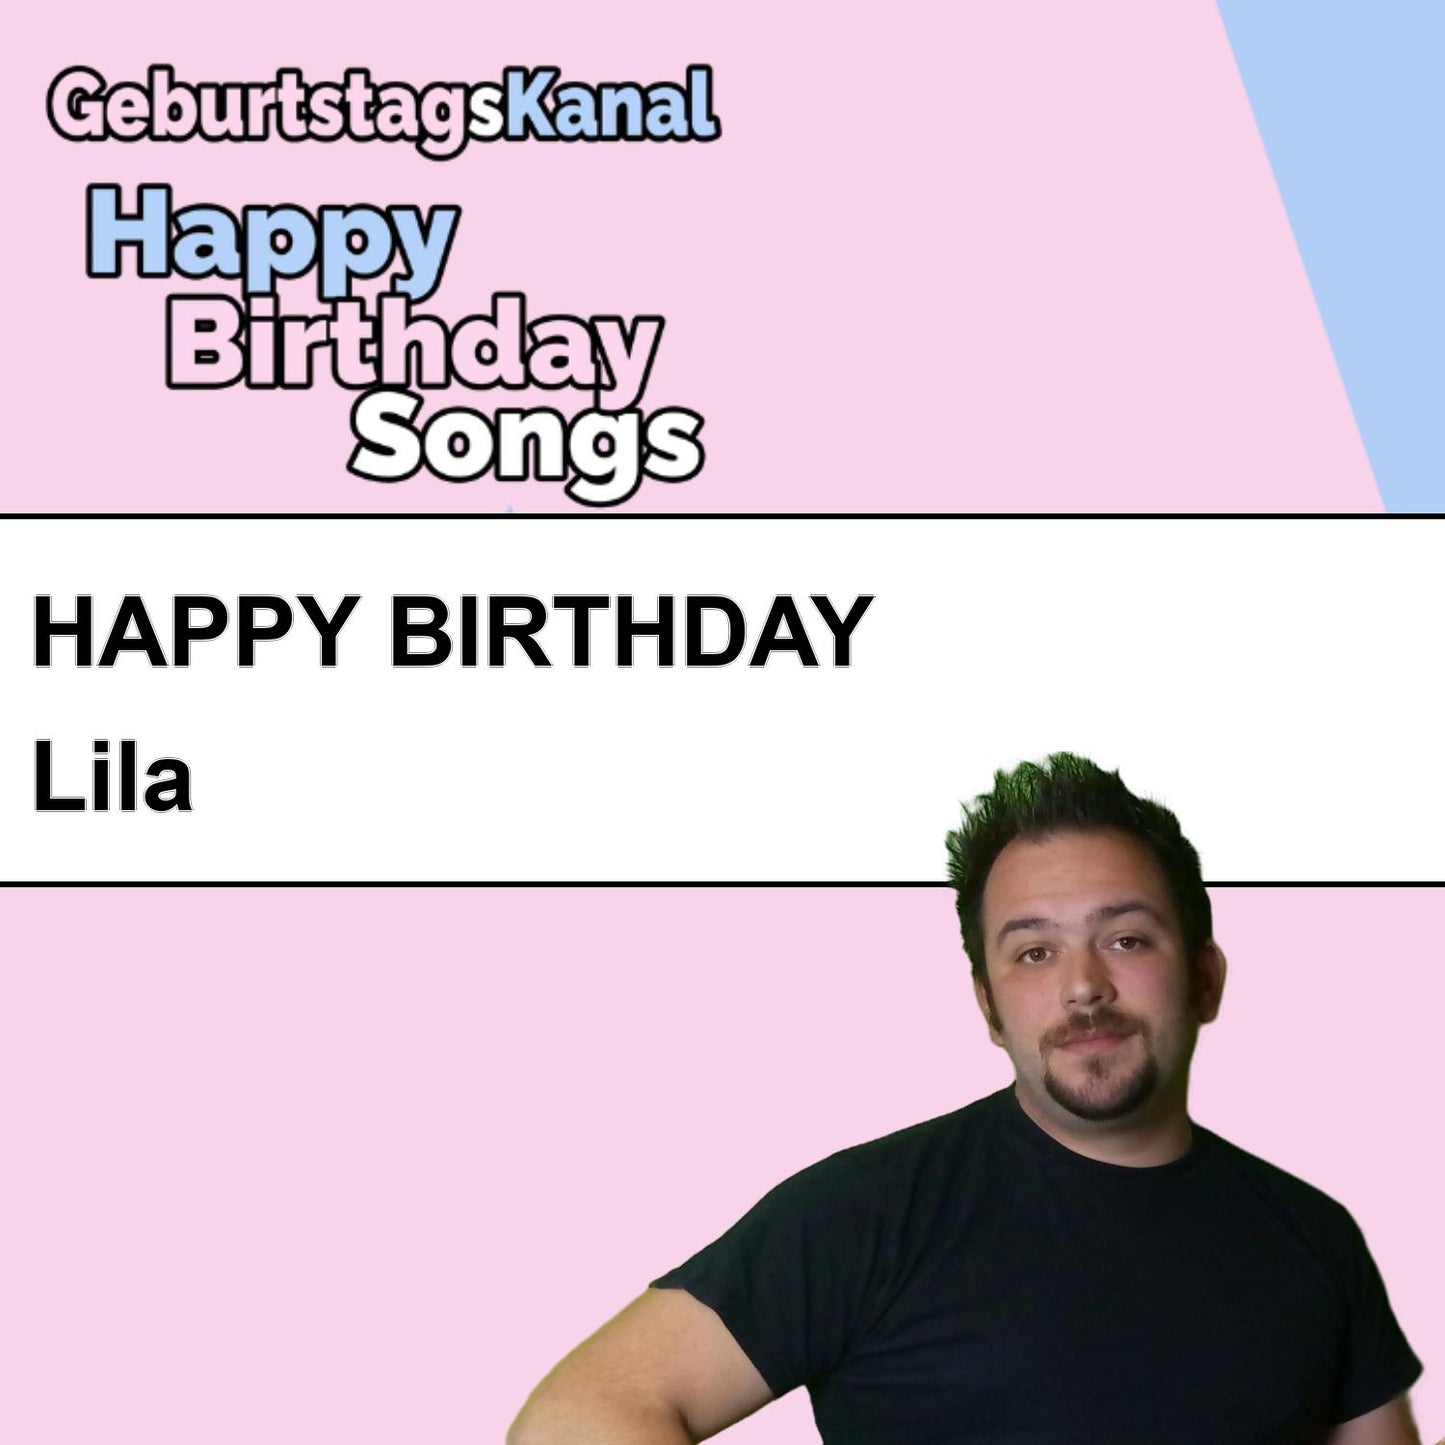 Produktbild Happy Birthday to you Lila mit Wunschgrußbotschaft